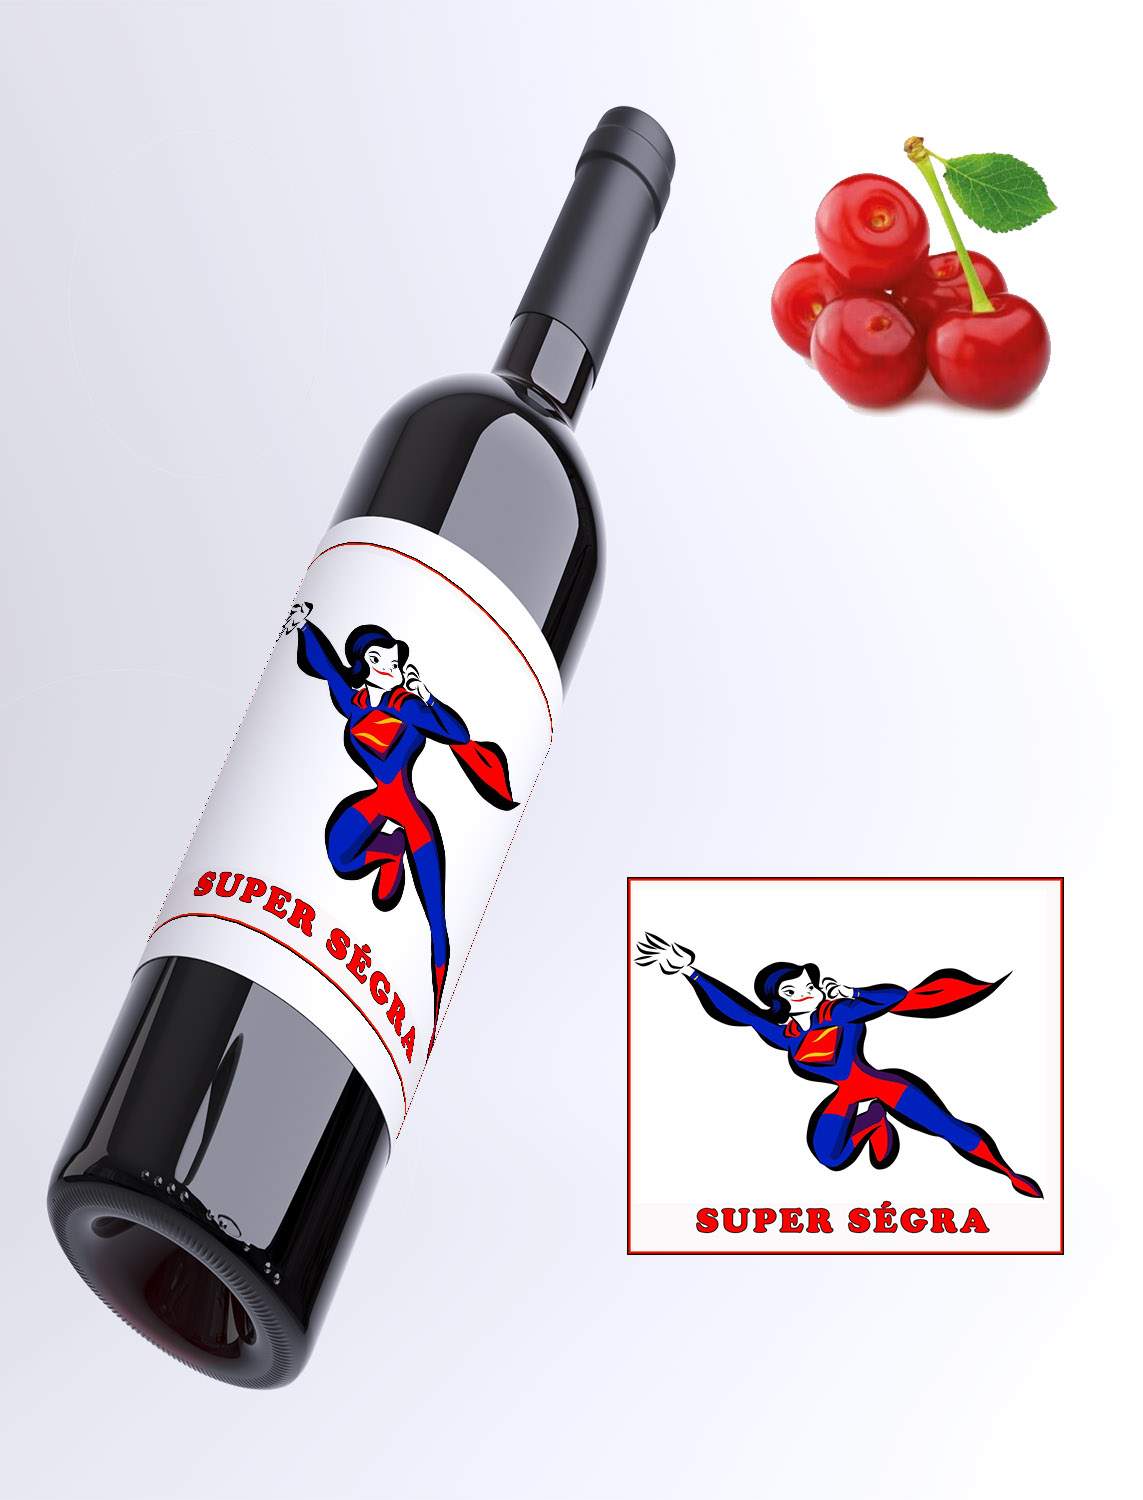 Super ségra - Višňové víno 